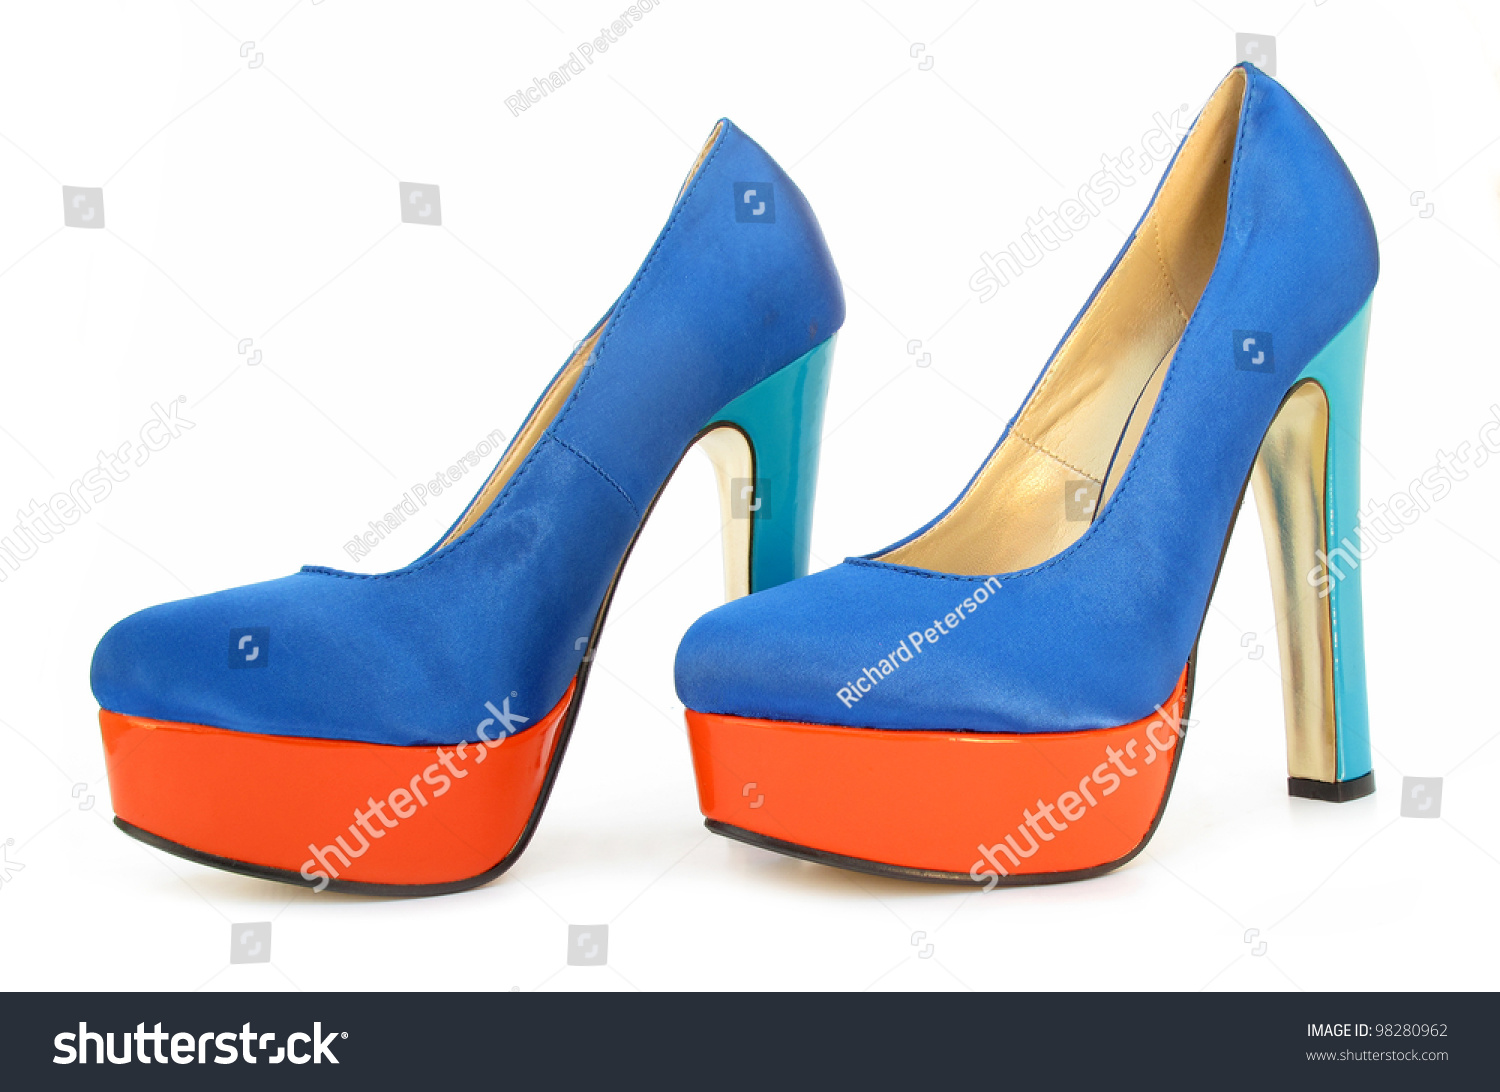 Blue Orange High Heels Pump Shoes Stock Photo 98280962 : Shutterstock